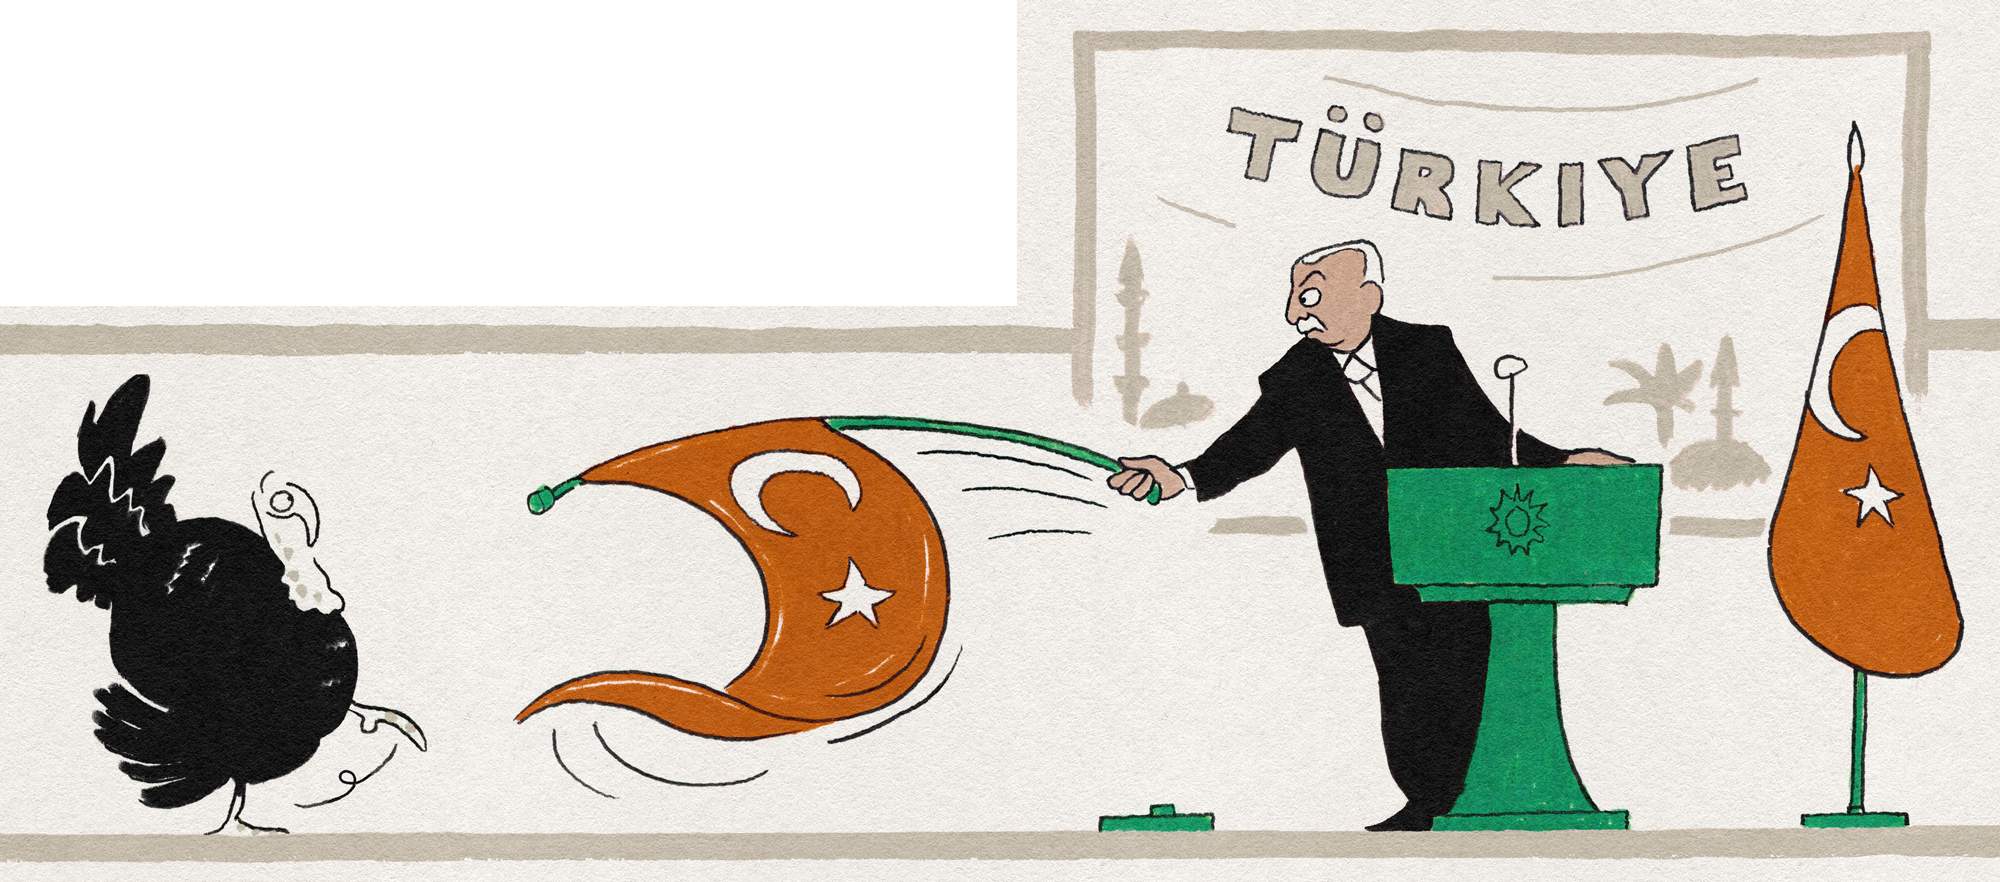 03-erdogan-turkiye-jonny-glover-illustration-fullres_1.jpg